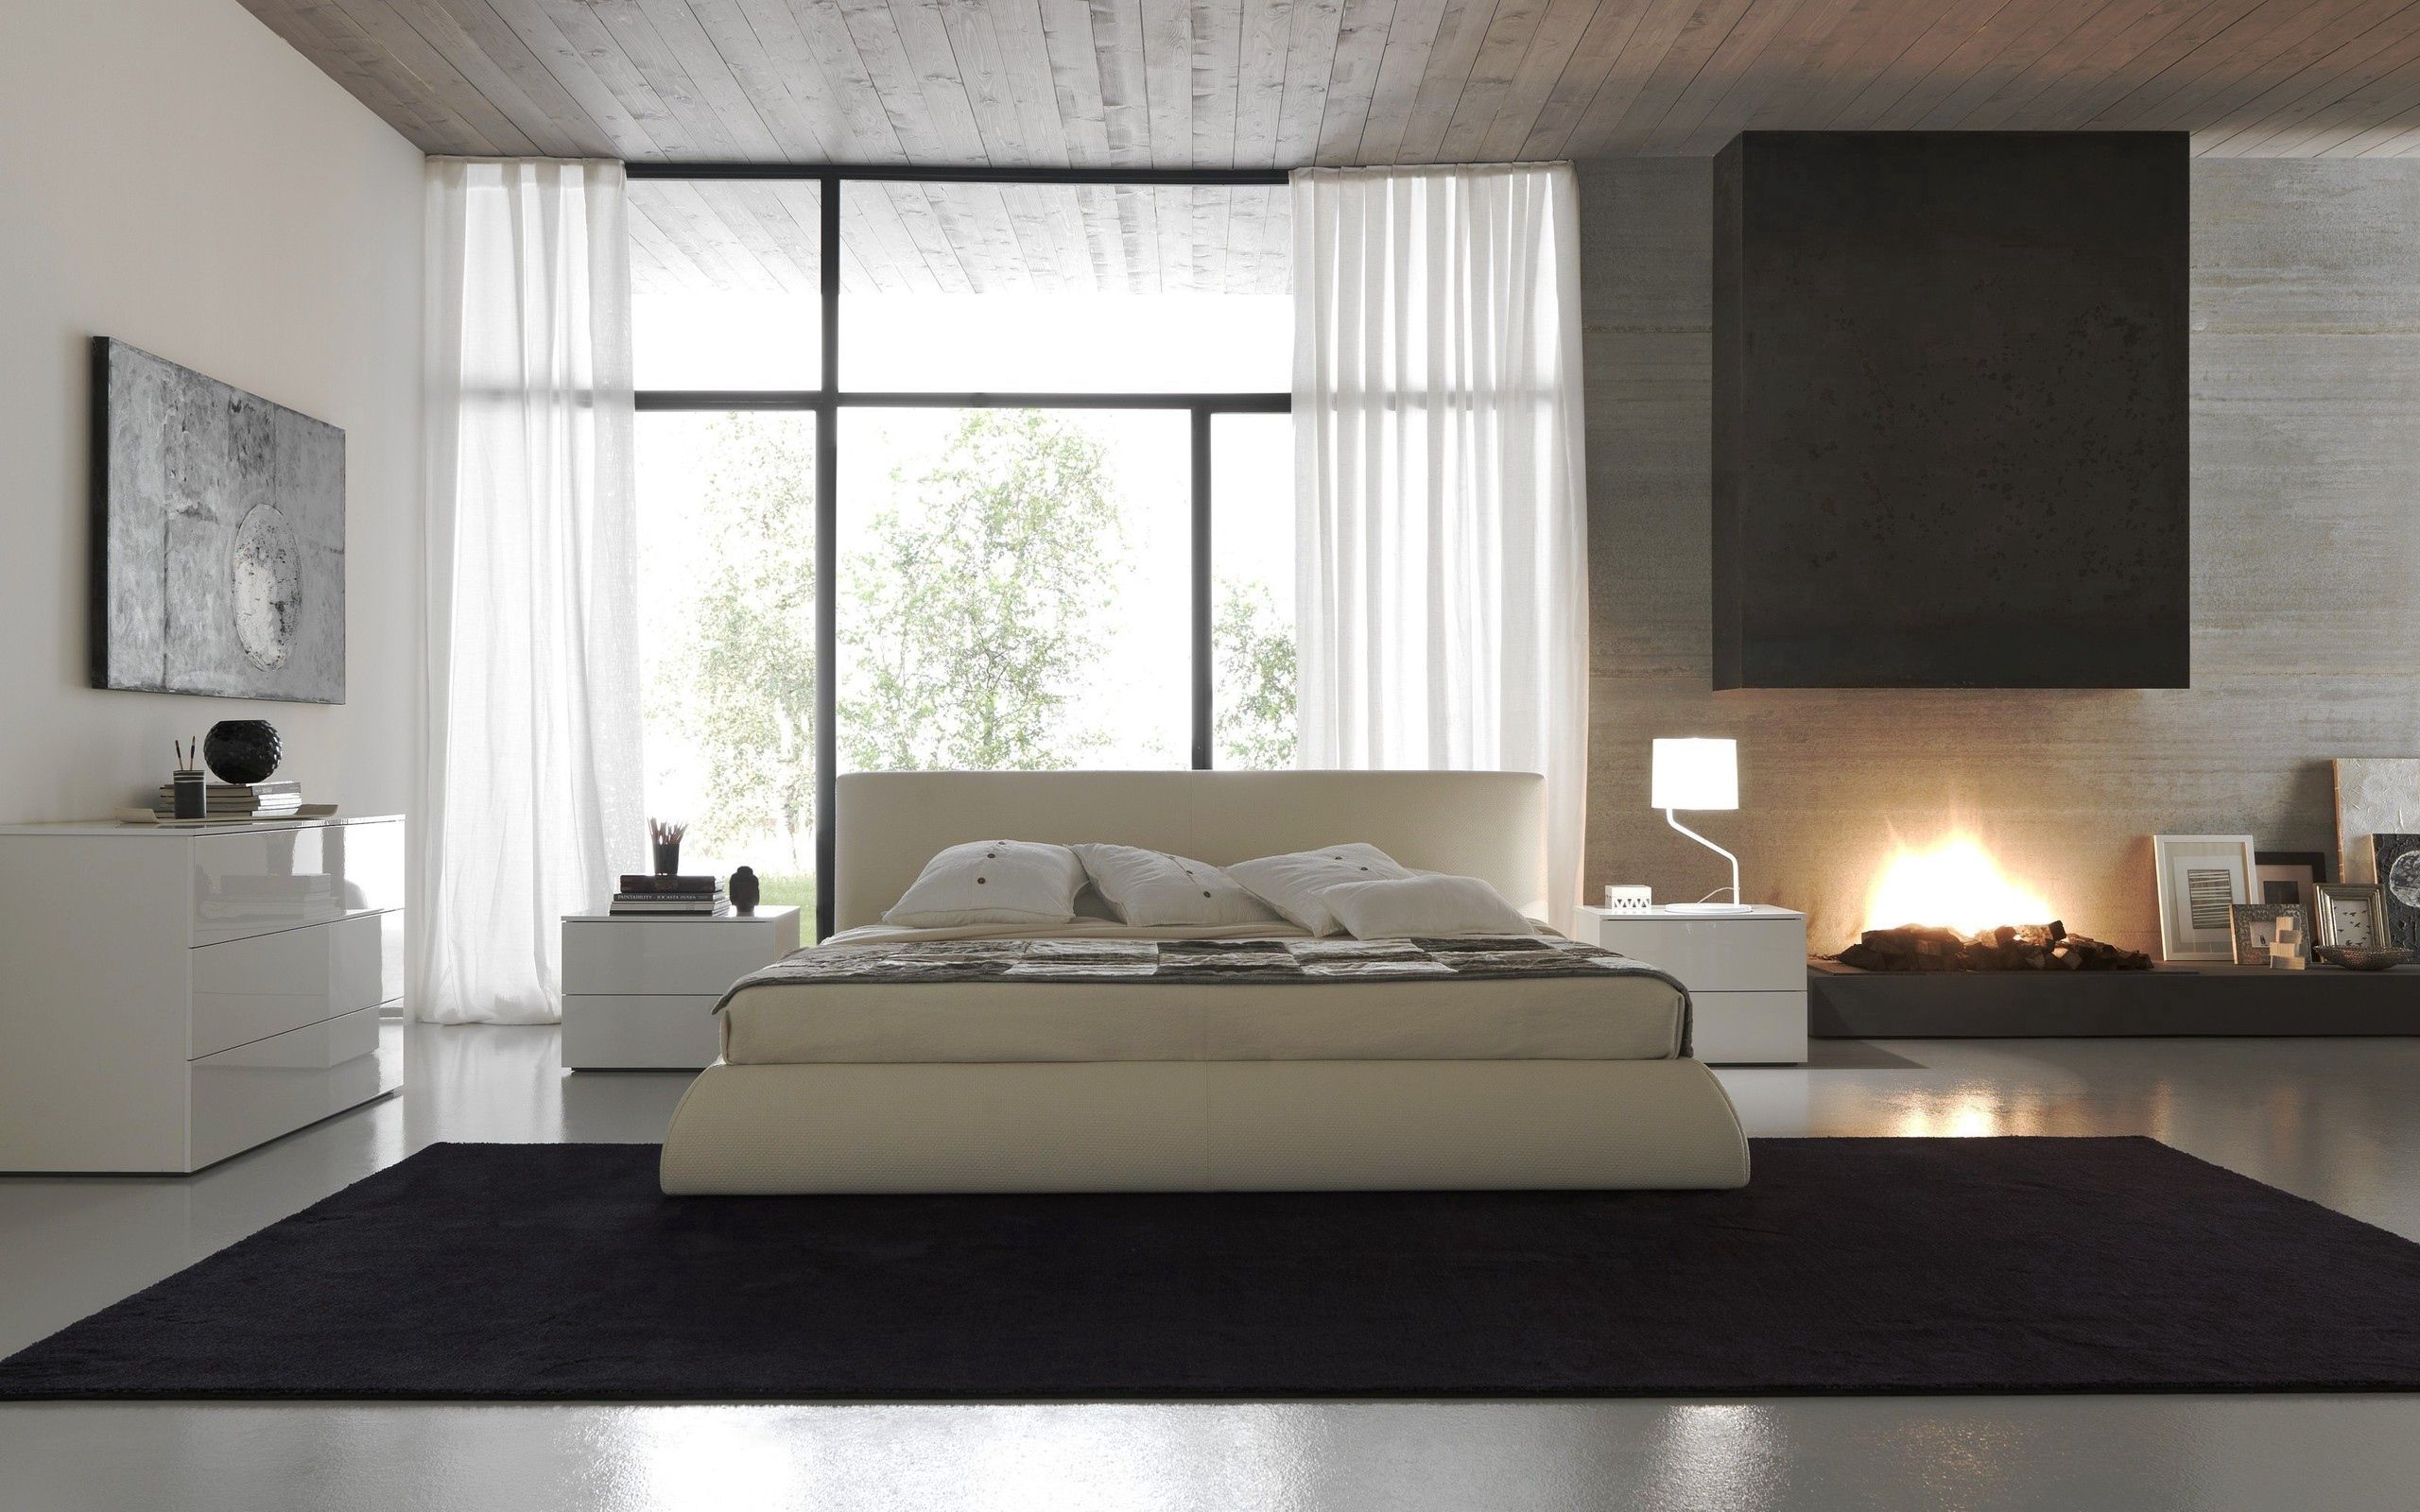 design, interior, miscellanea, miscellaneous, room, coziness, comfort